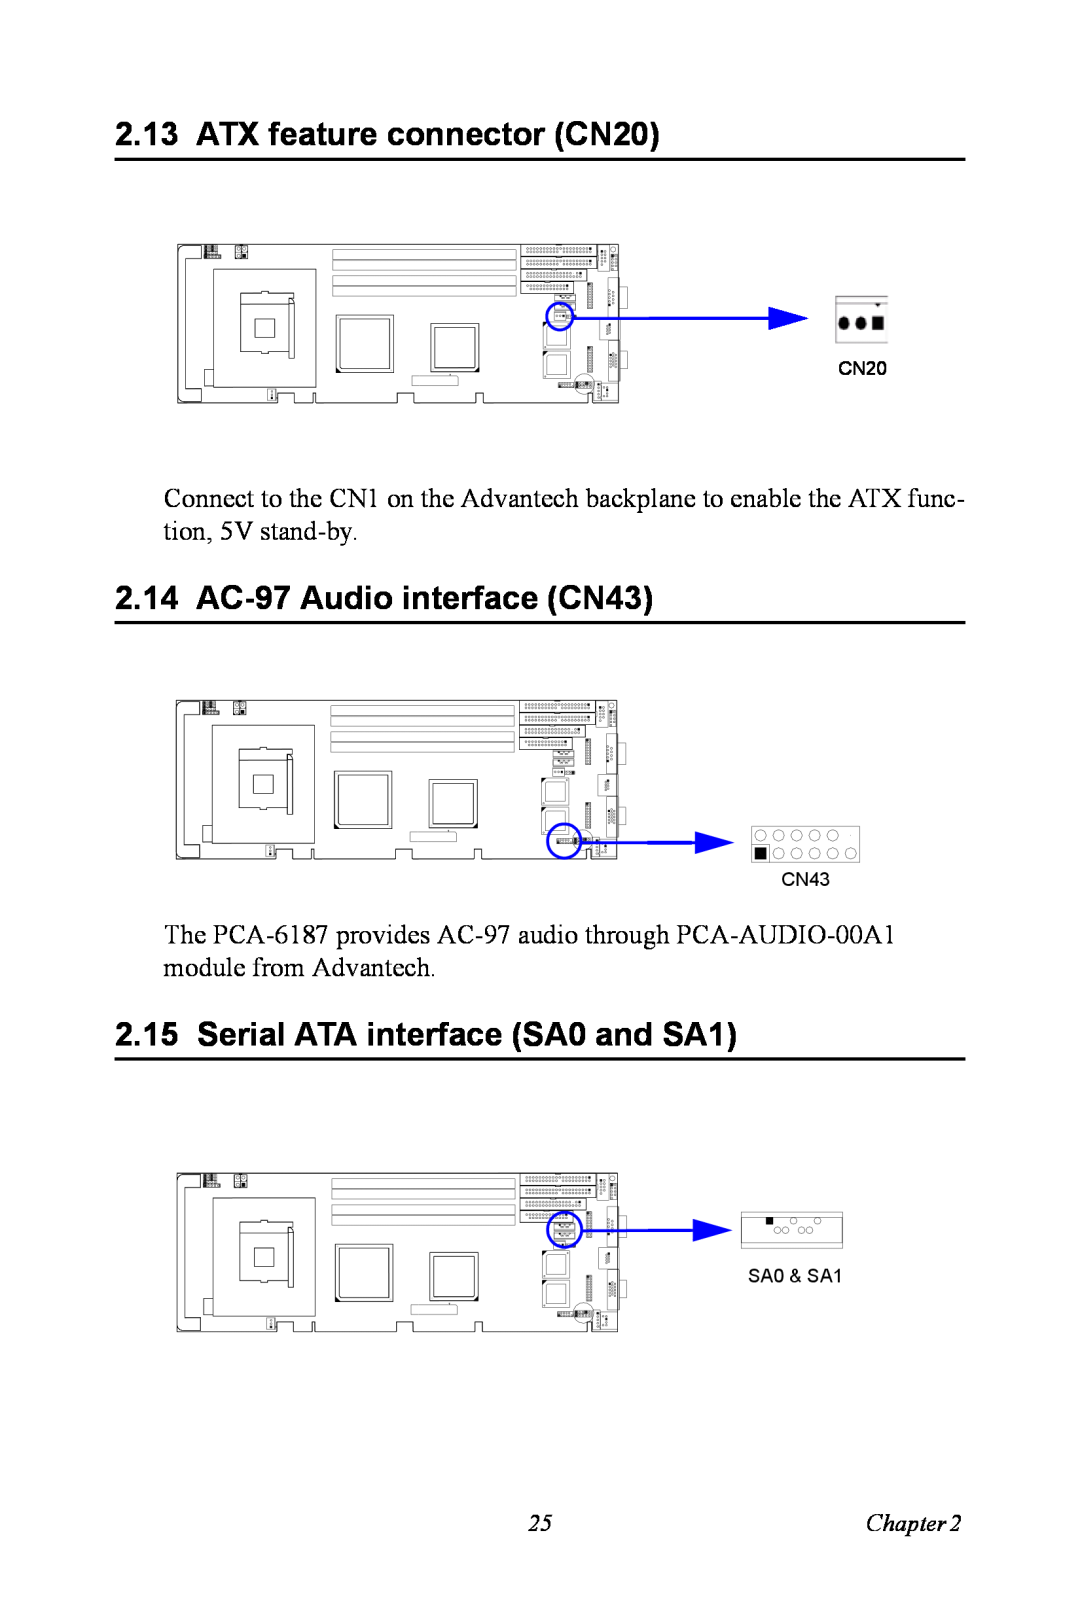 Advantech PCA-6187 ATX feature connector CN20, 2.14 AC-97 Audio interface CN43, Serial ATA interface SA0 and SA1 